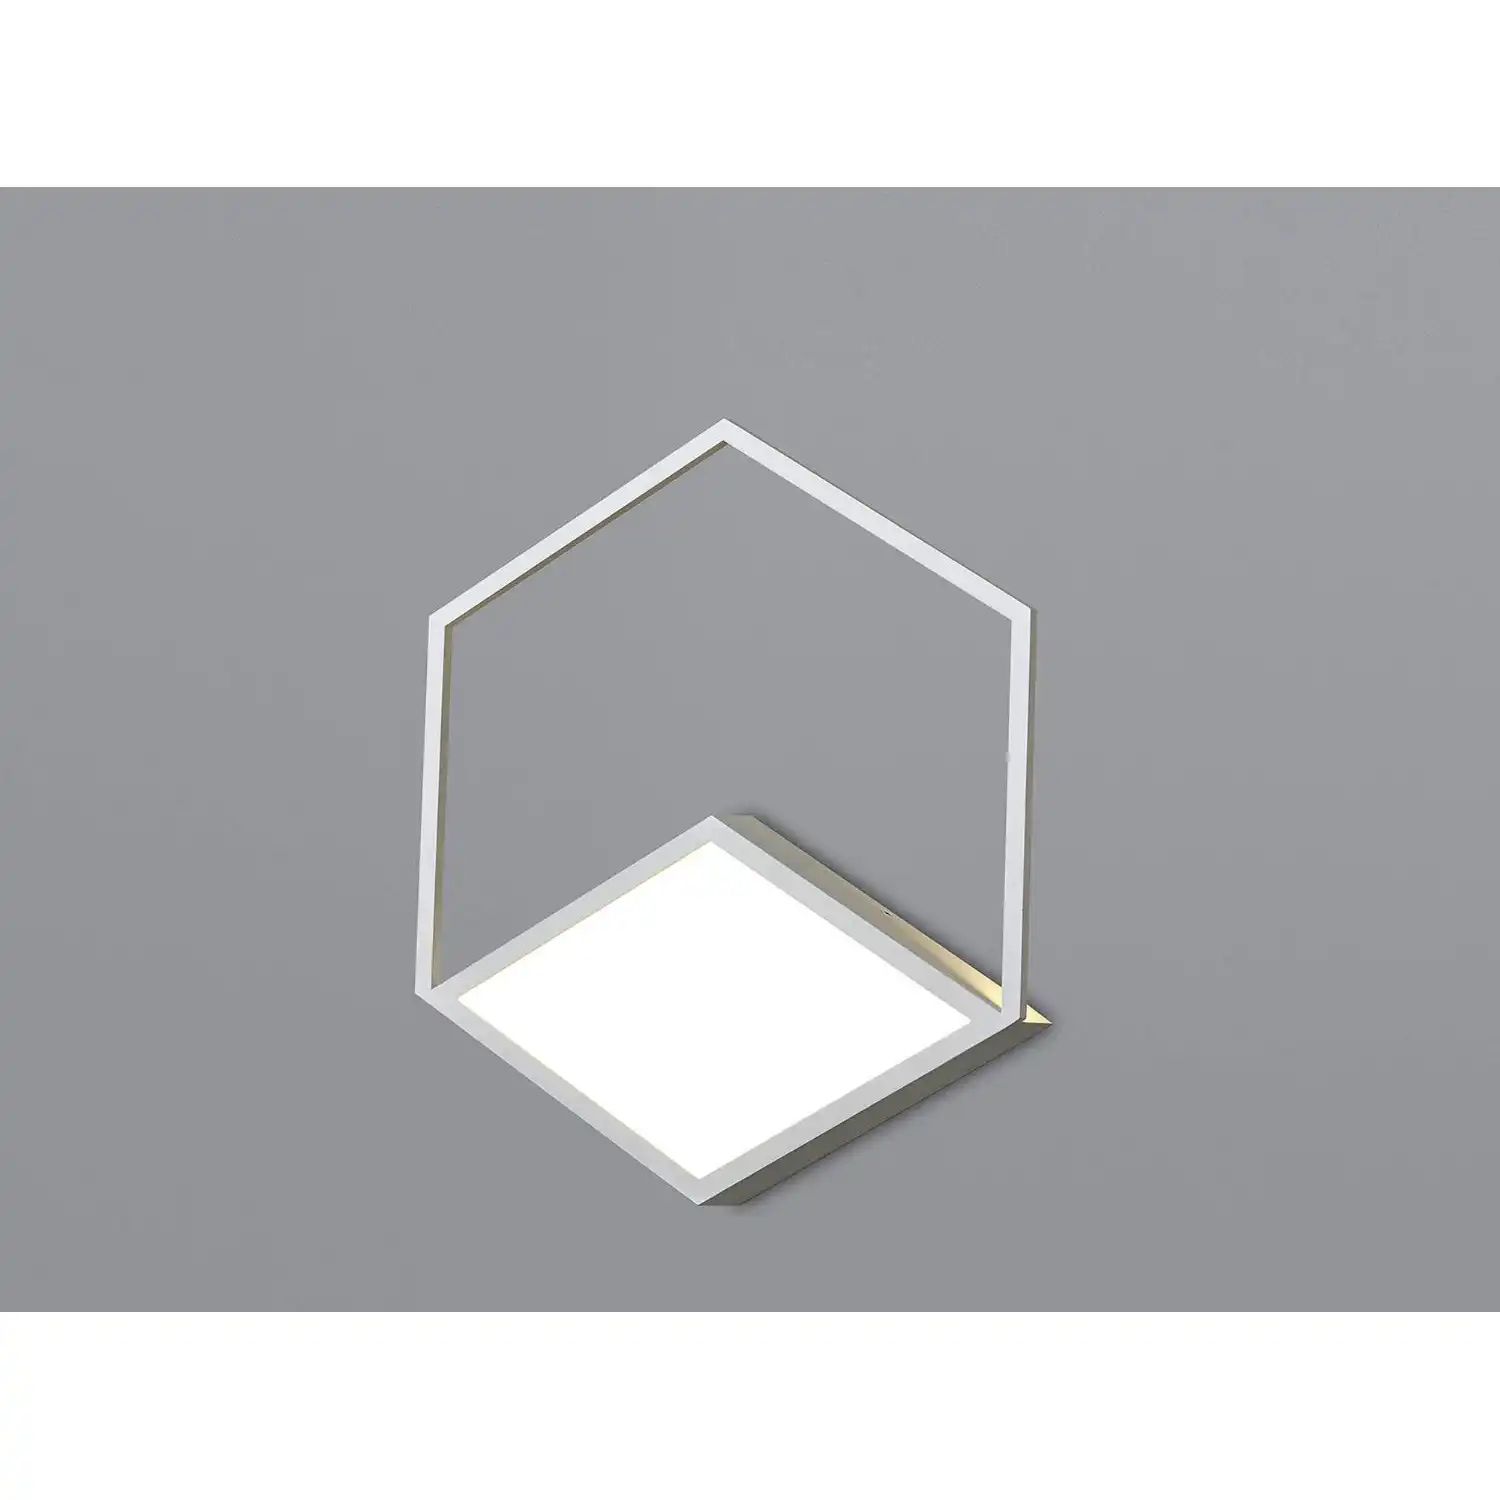 Kubick Ceiling Wall Light, 32W LED, 3000K, 1870lm, White, 3yrs Warranty